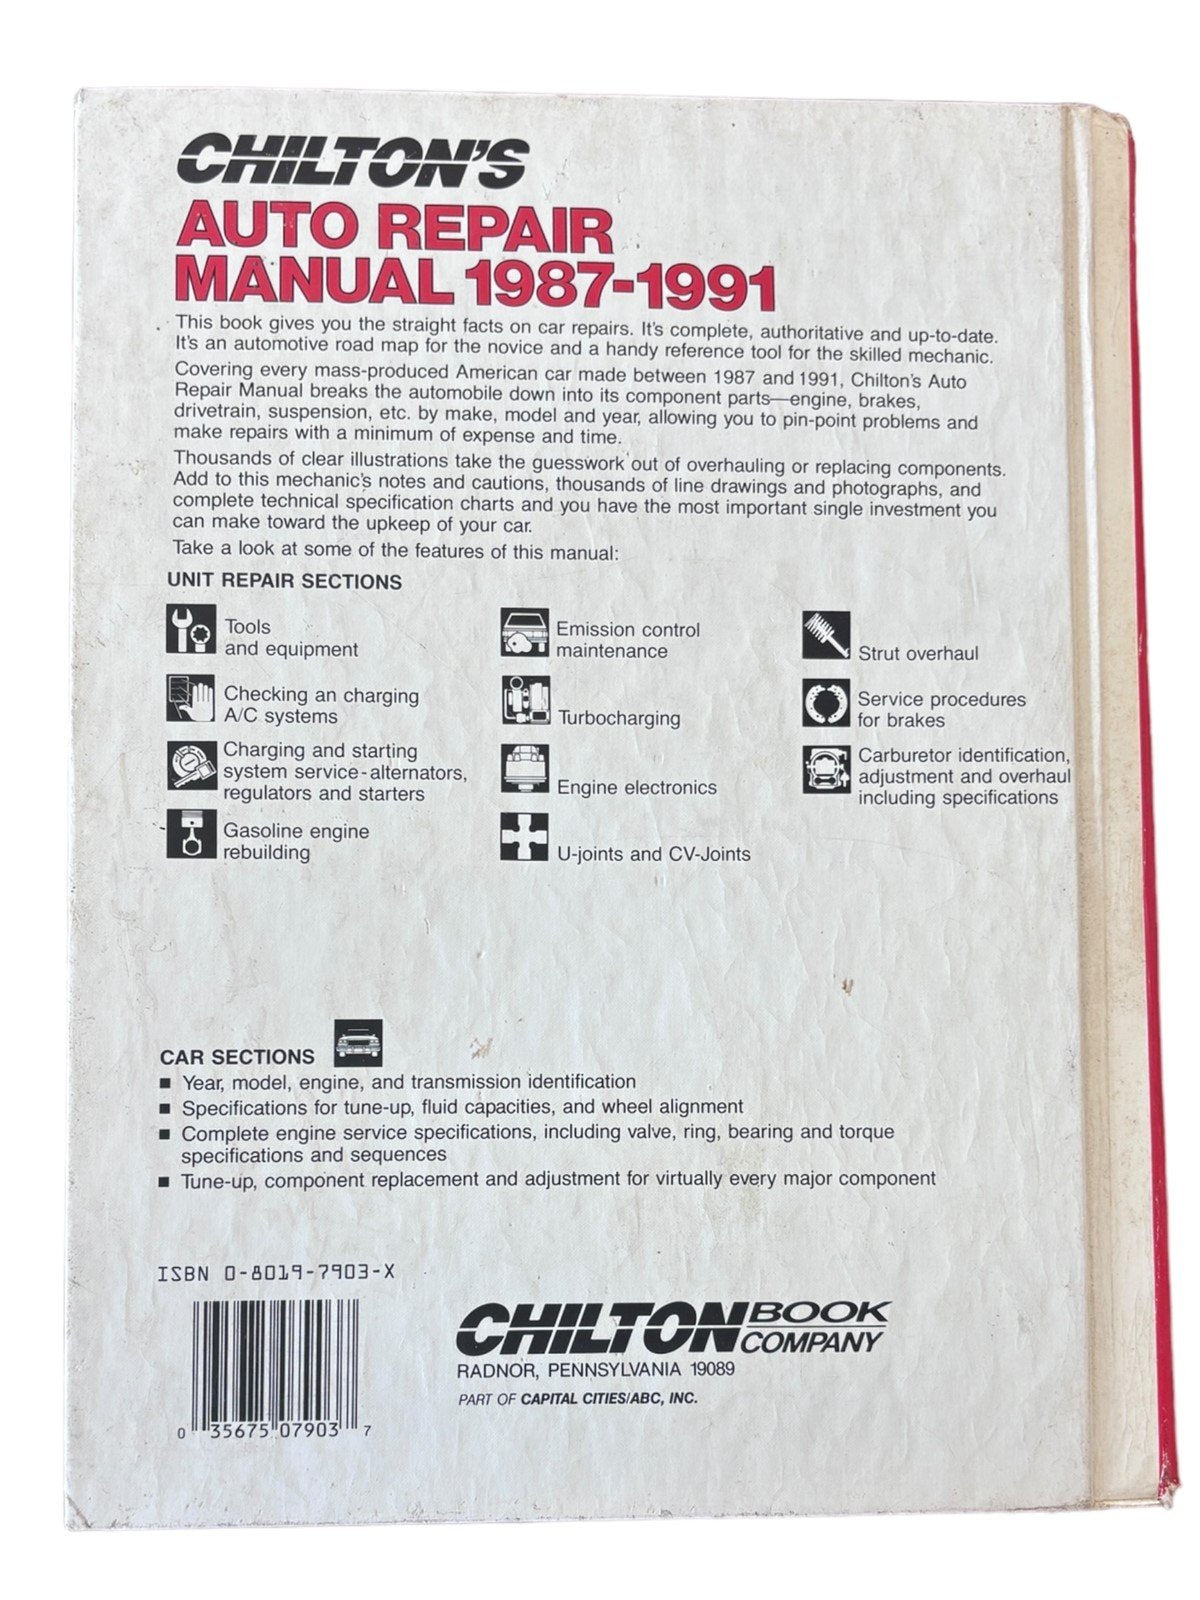 Chilton's Auto Repair Manual 1987-1991 Part No. 7903